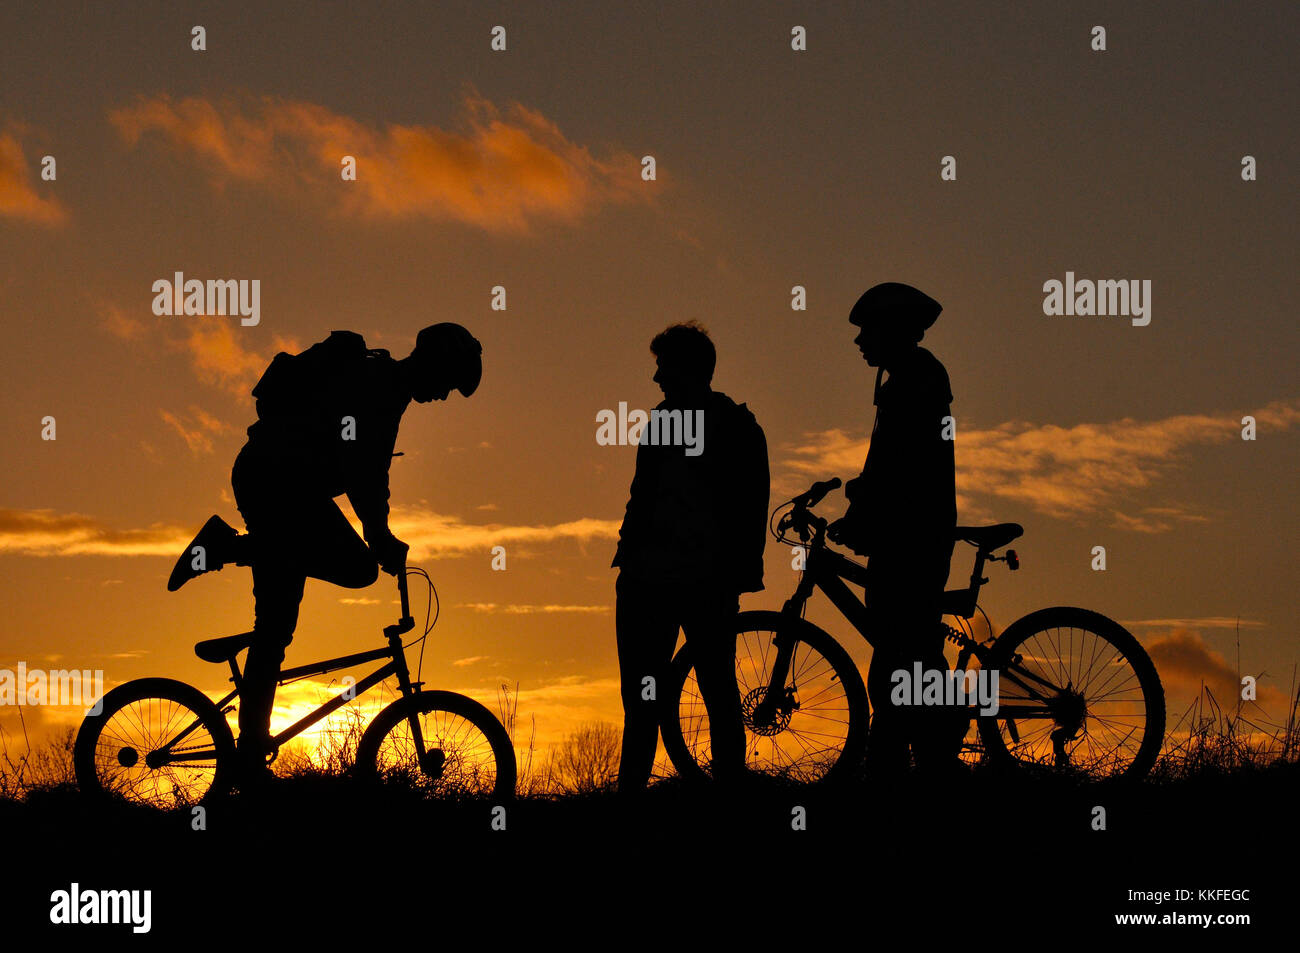 Mountain Bikers in silhouette Stock Photo